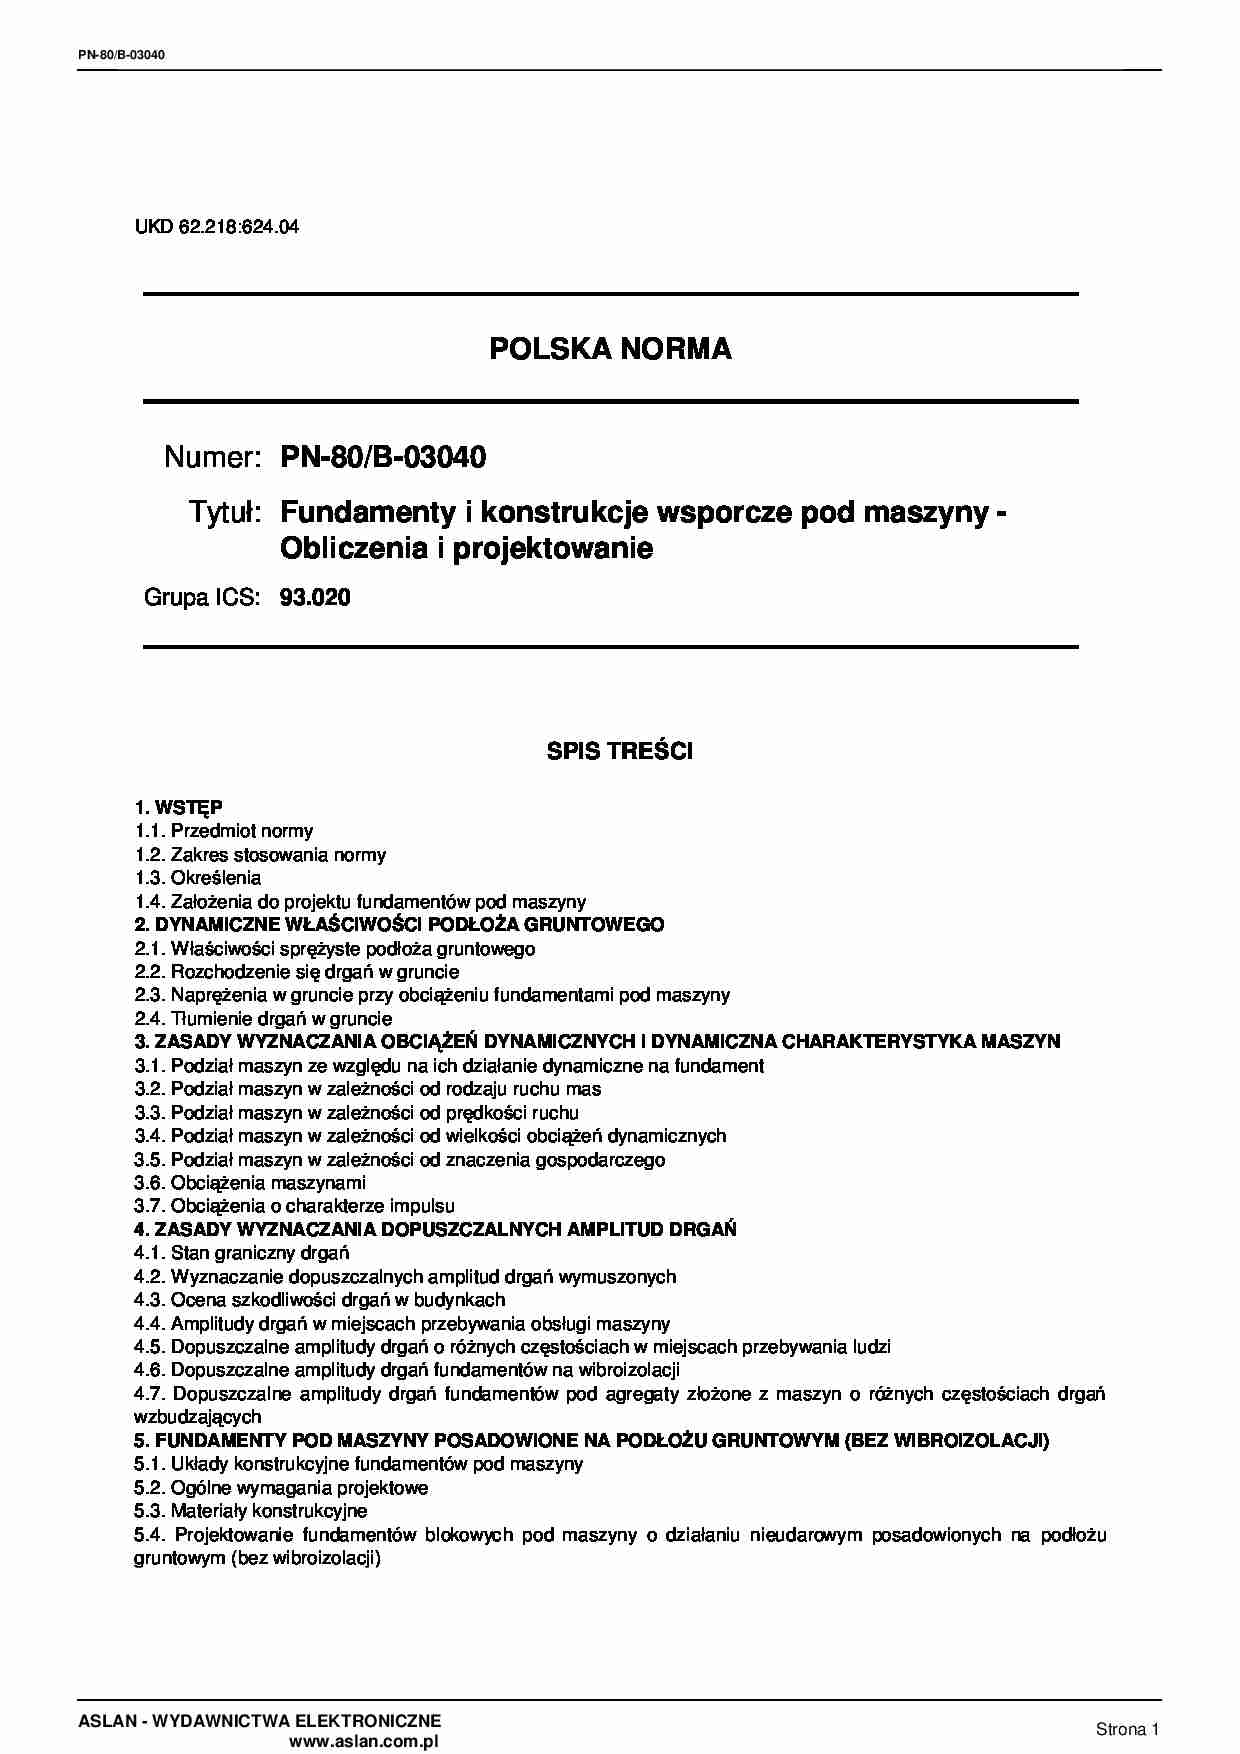 Fundamenty pod maszyny - Polska norma  - strona 1